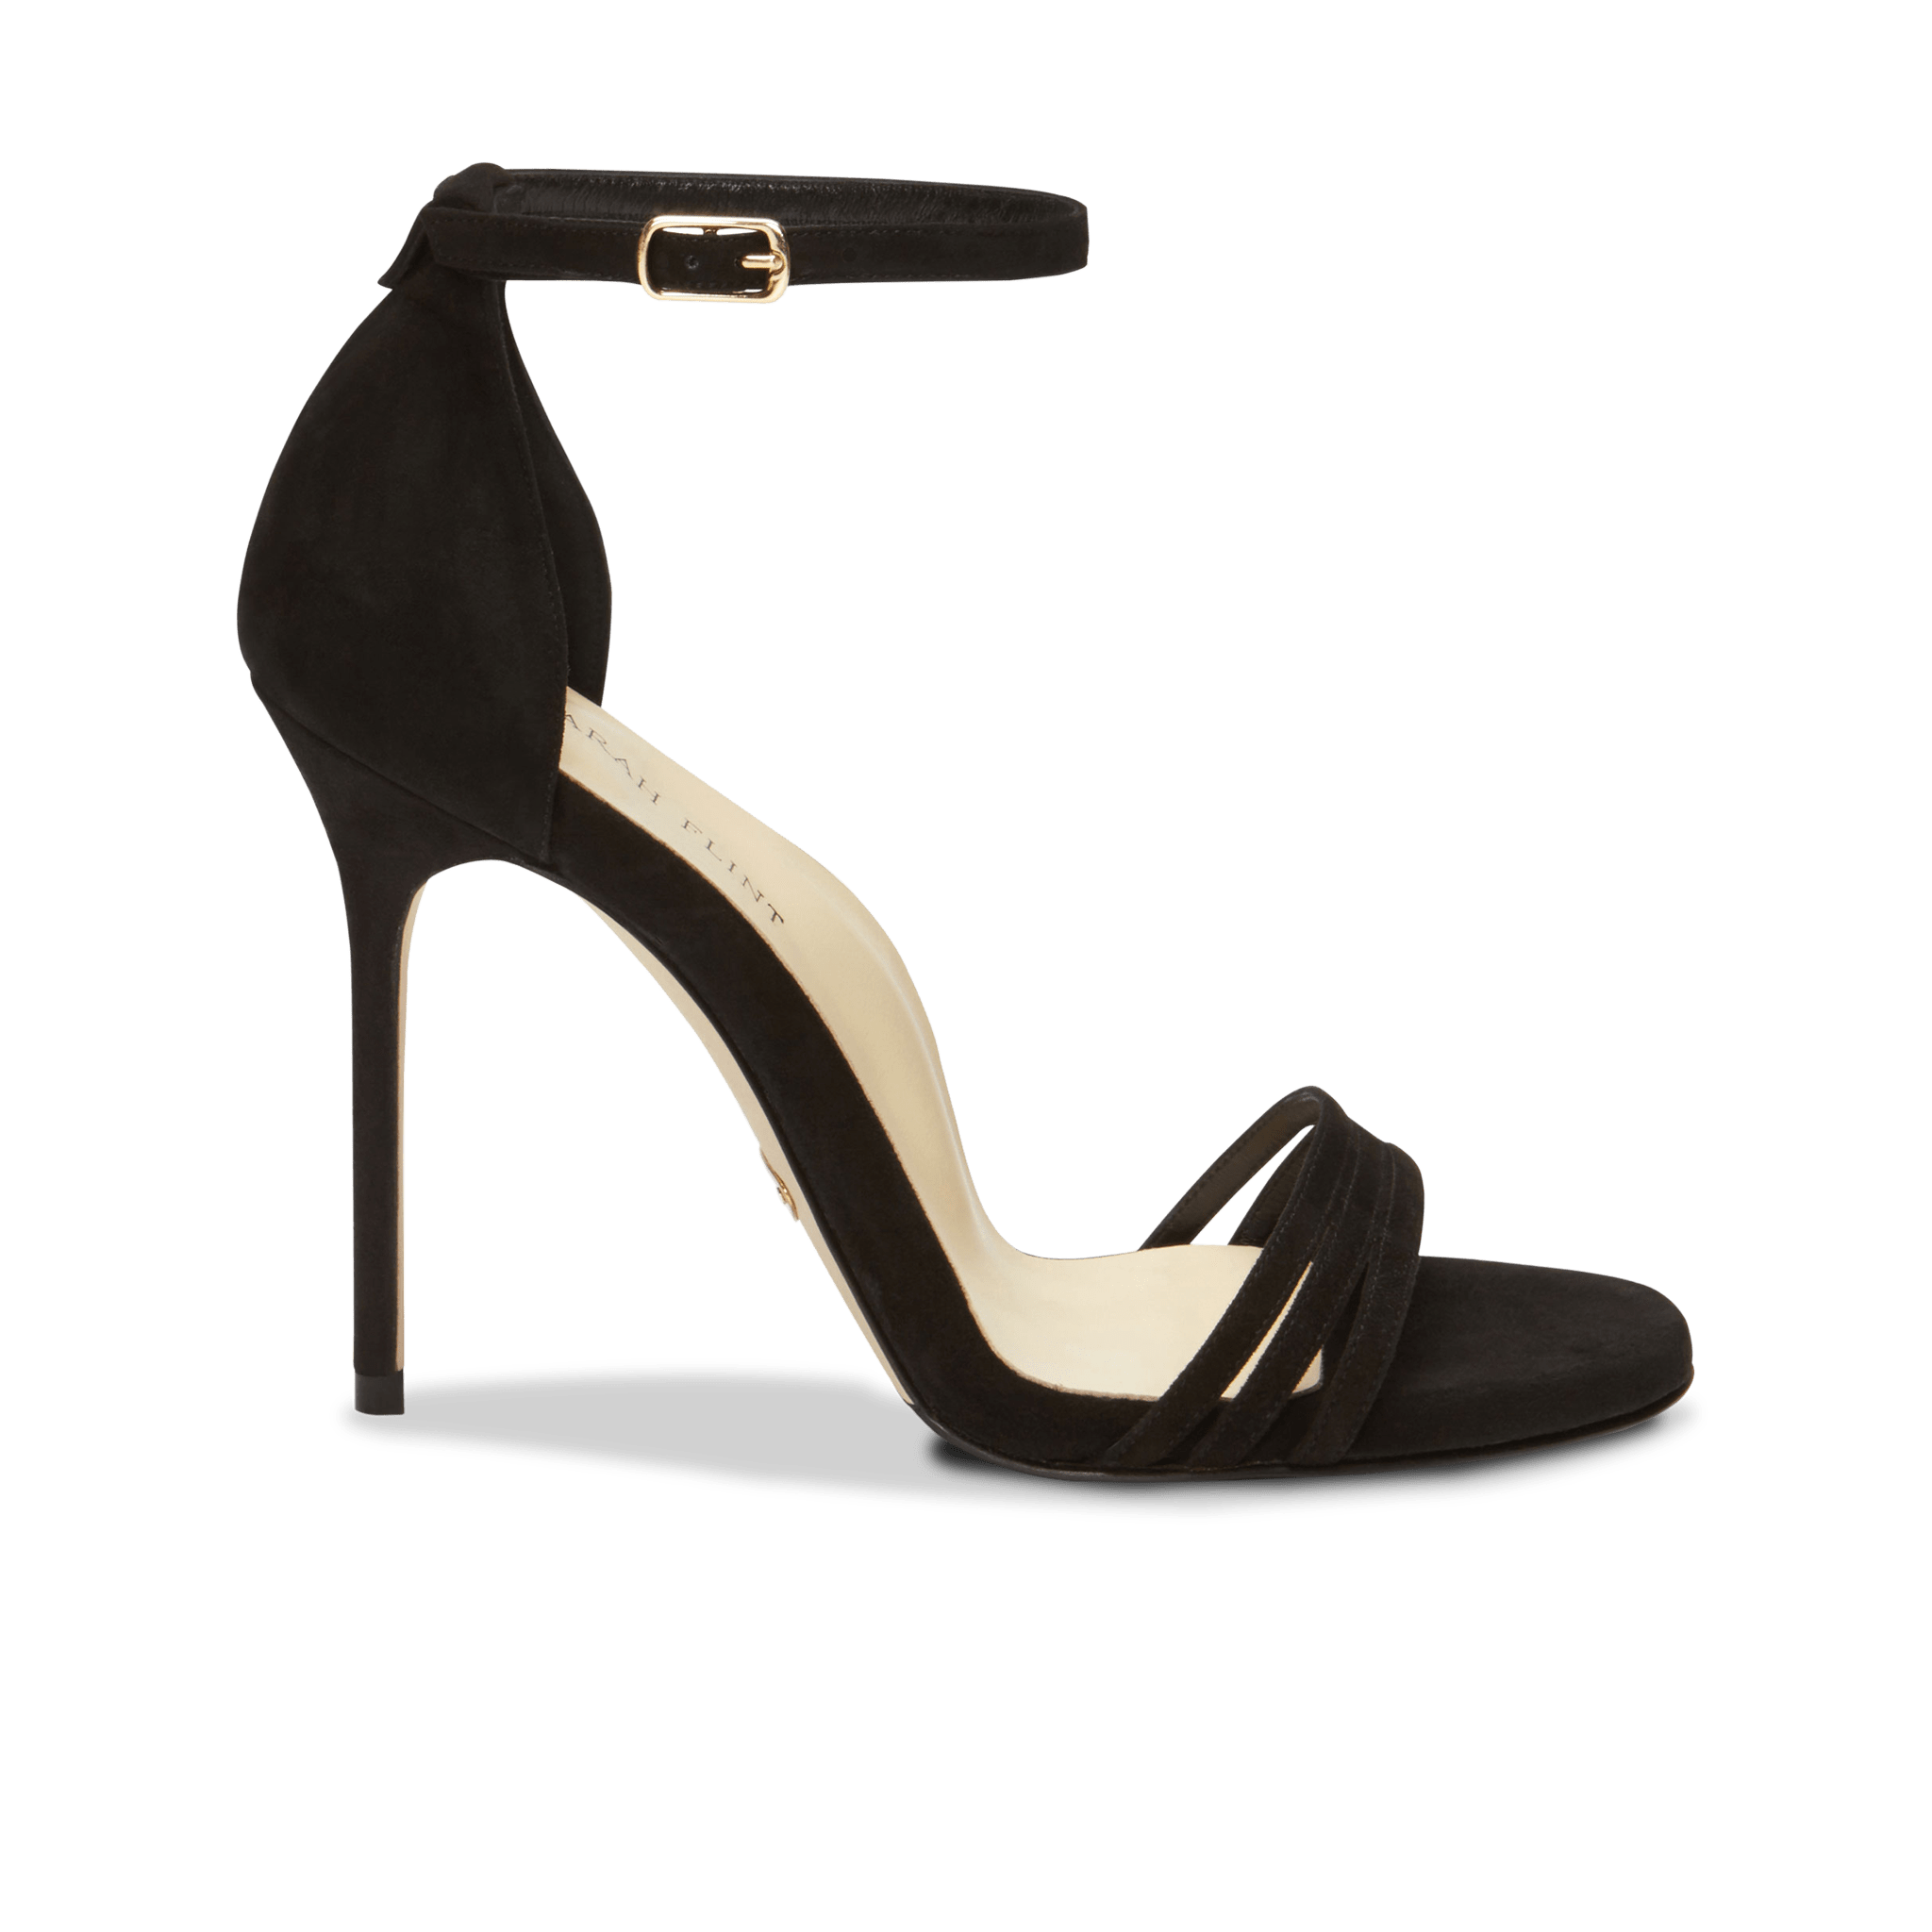 Gucci Women's Patent Leather Platform Sandals Cream 38.5 M EU White :  Amazon.in: Shoes & Handbags